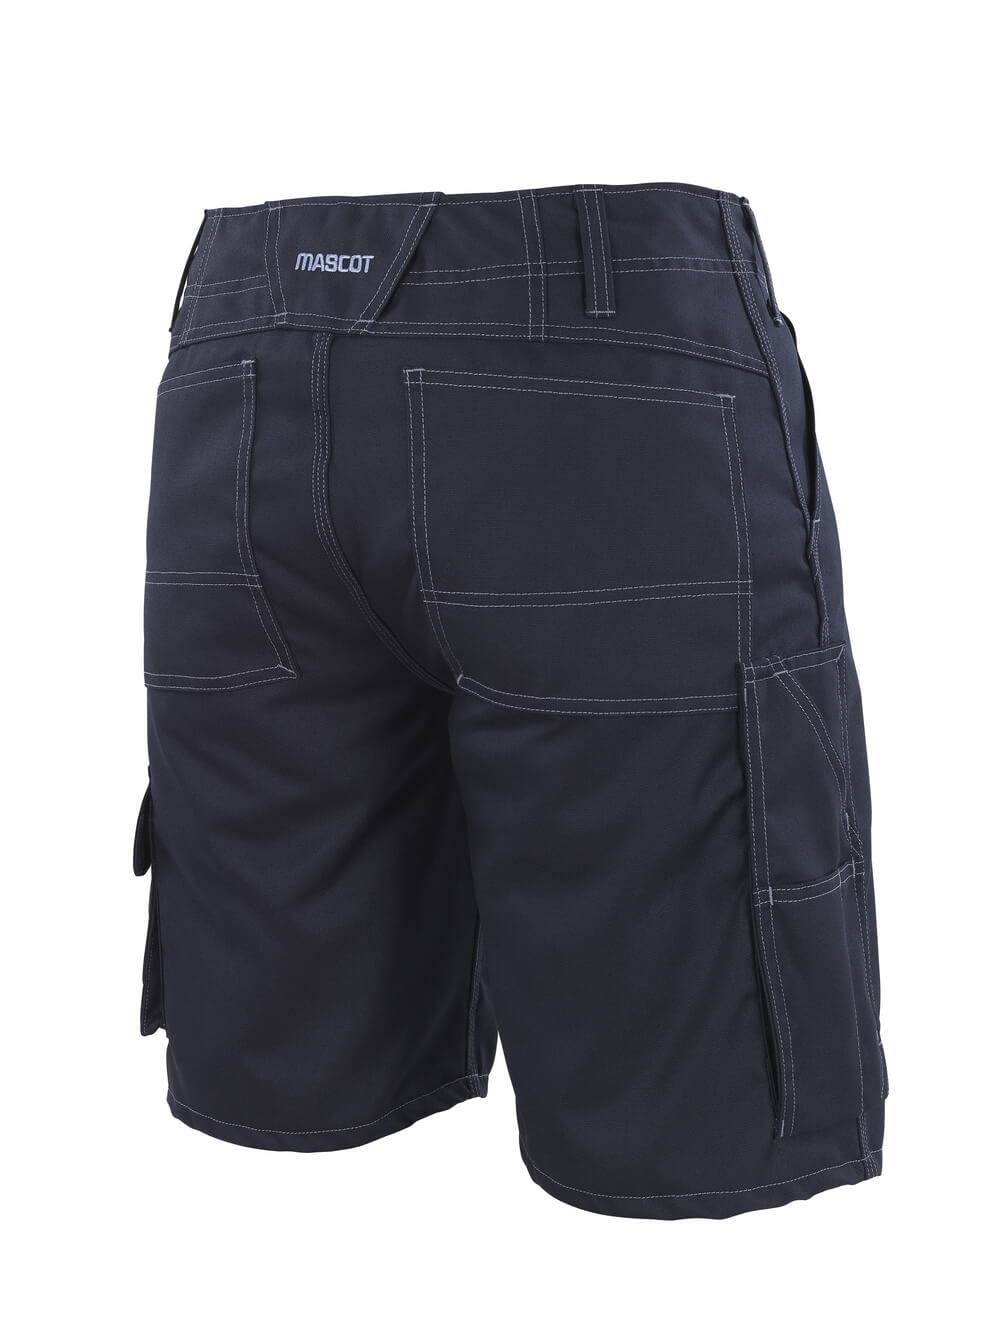 MASCOT® INDUSTRY Shorts »Charleston« Gr. C42, schwarzblau - bekommst Du bei ★ HUG Technik ✓